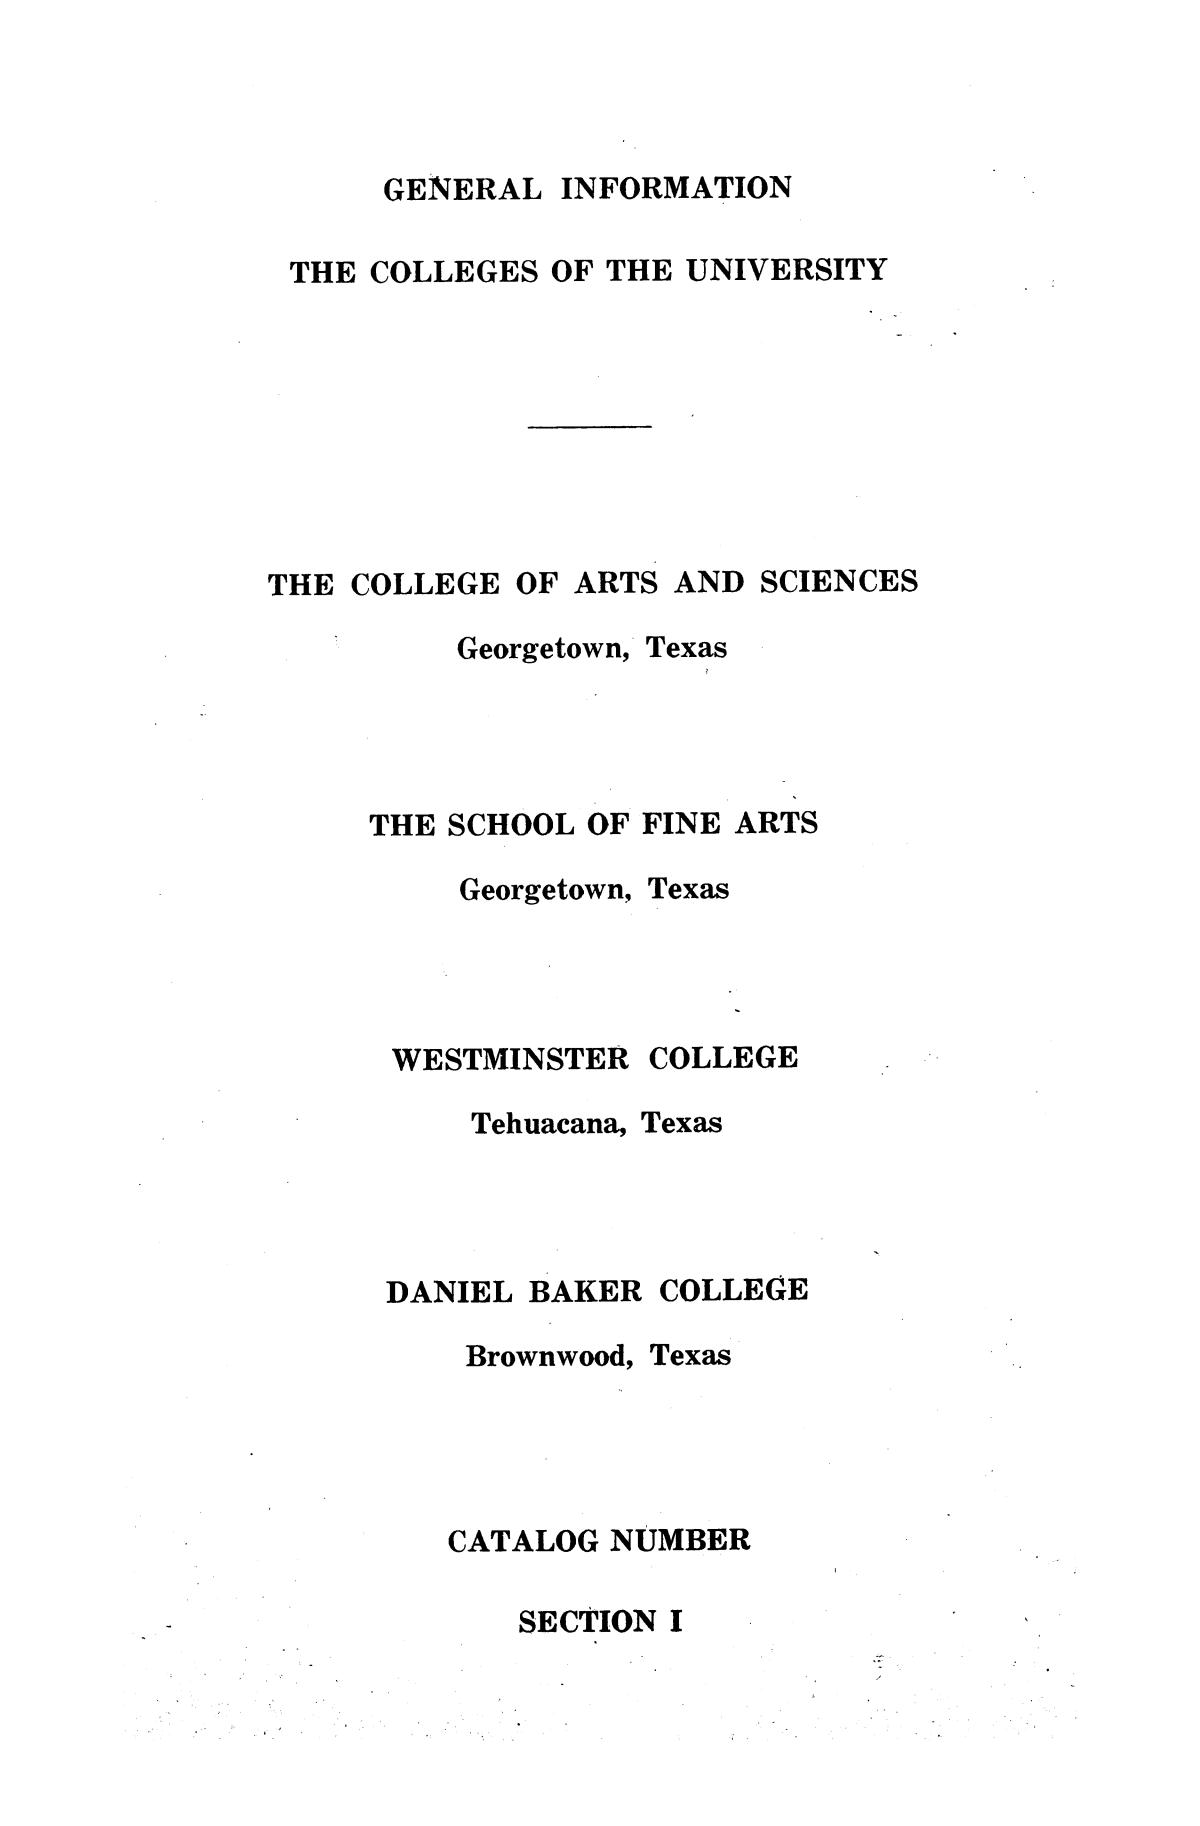 Catalogue of Daniel Baker College, 1948-1949
                                                
                                                    4
                                                